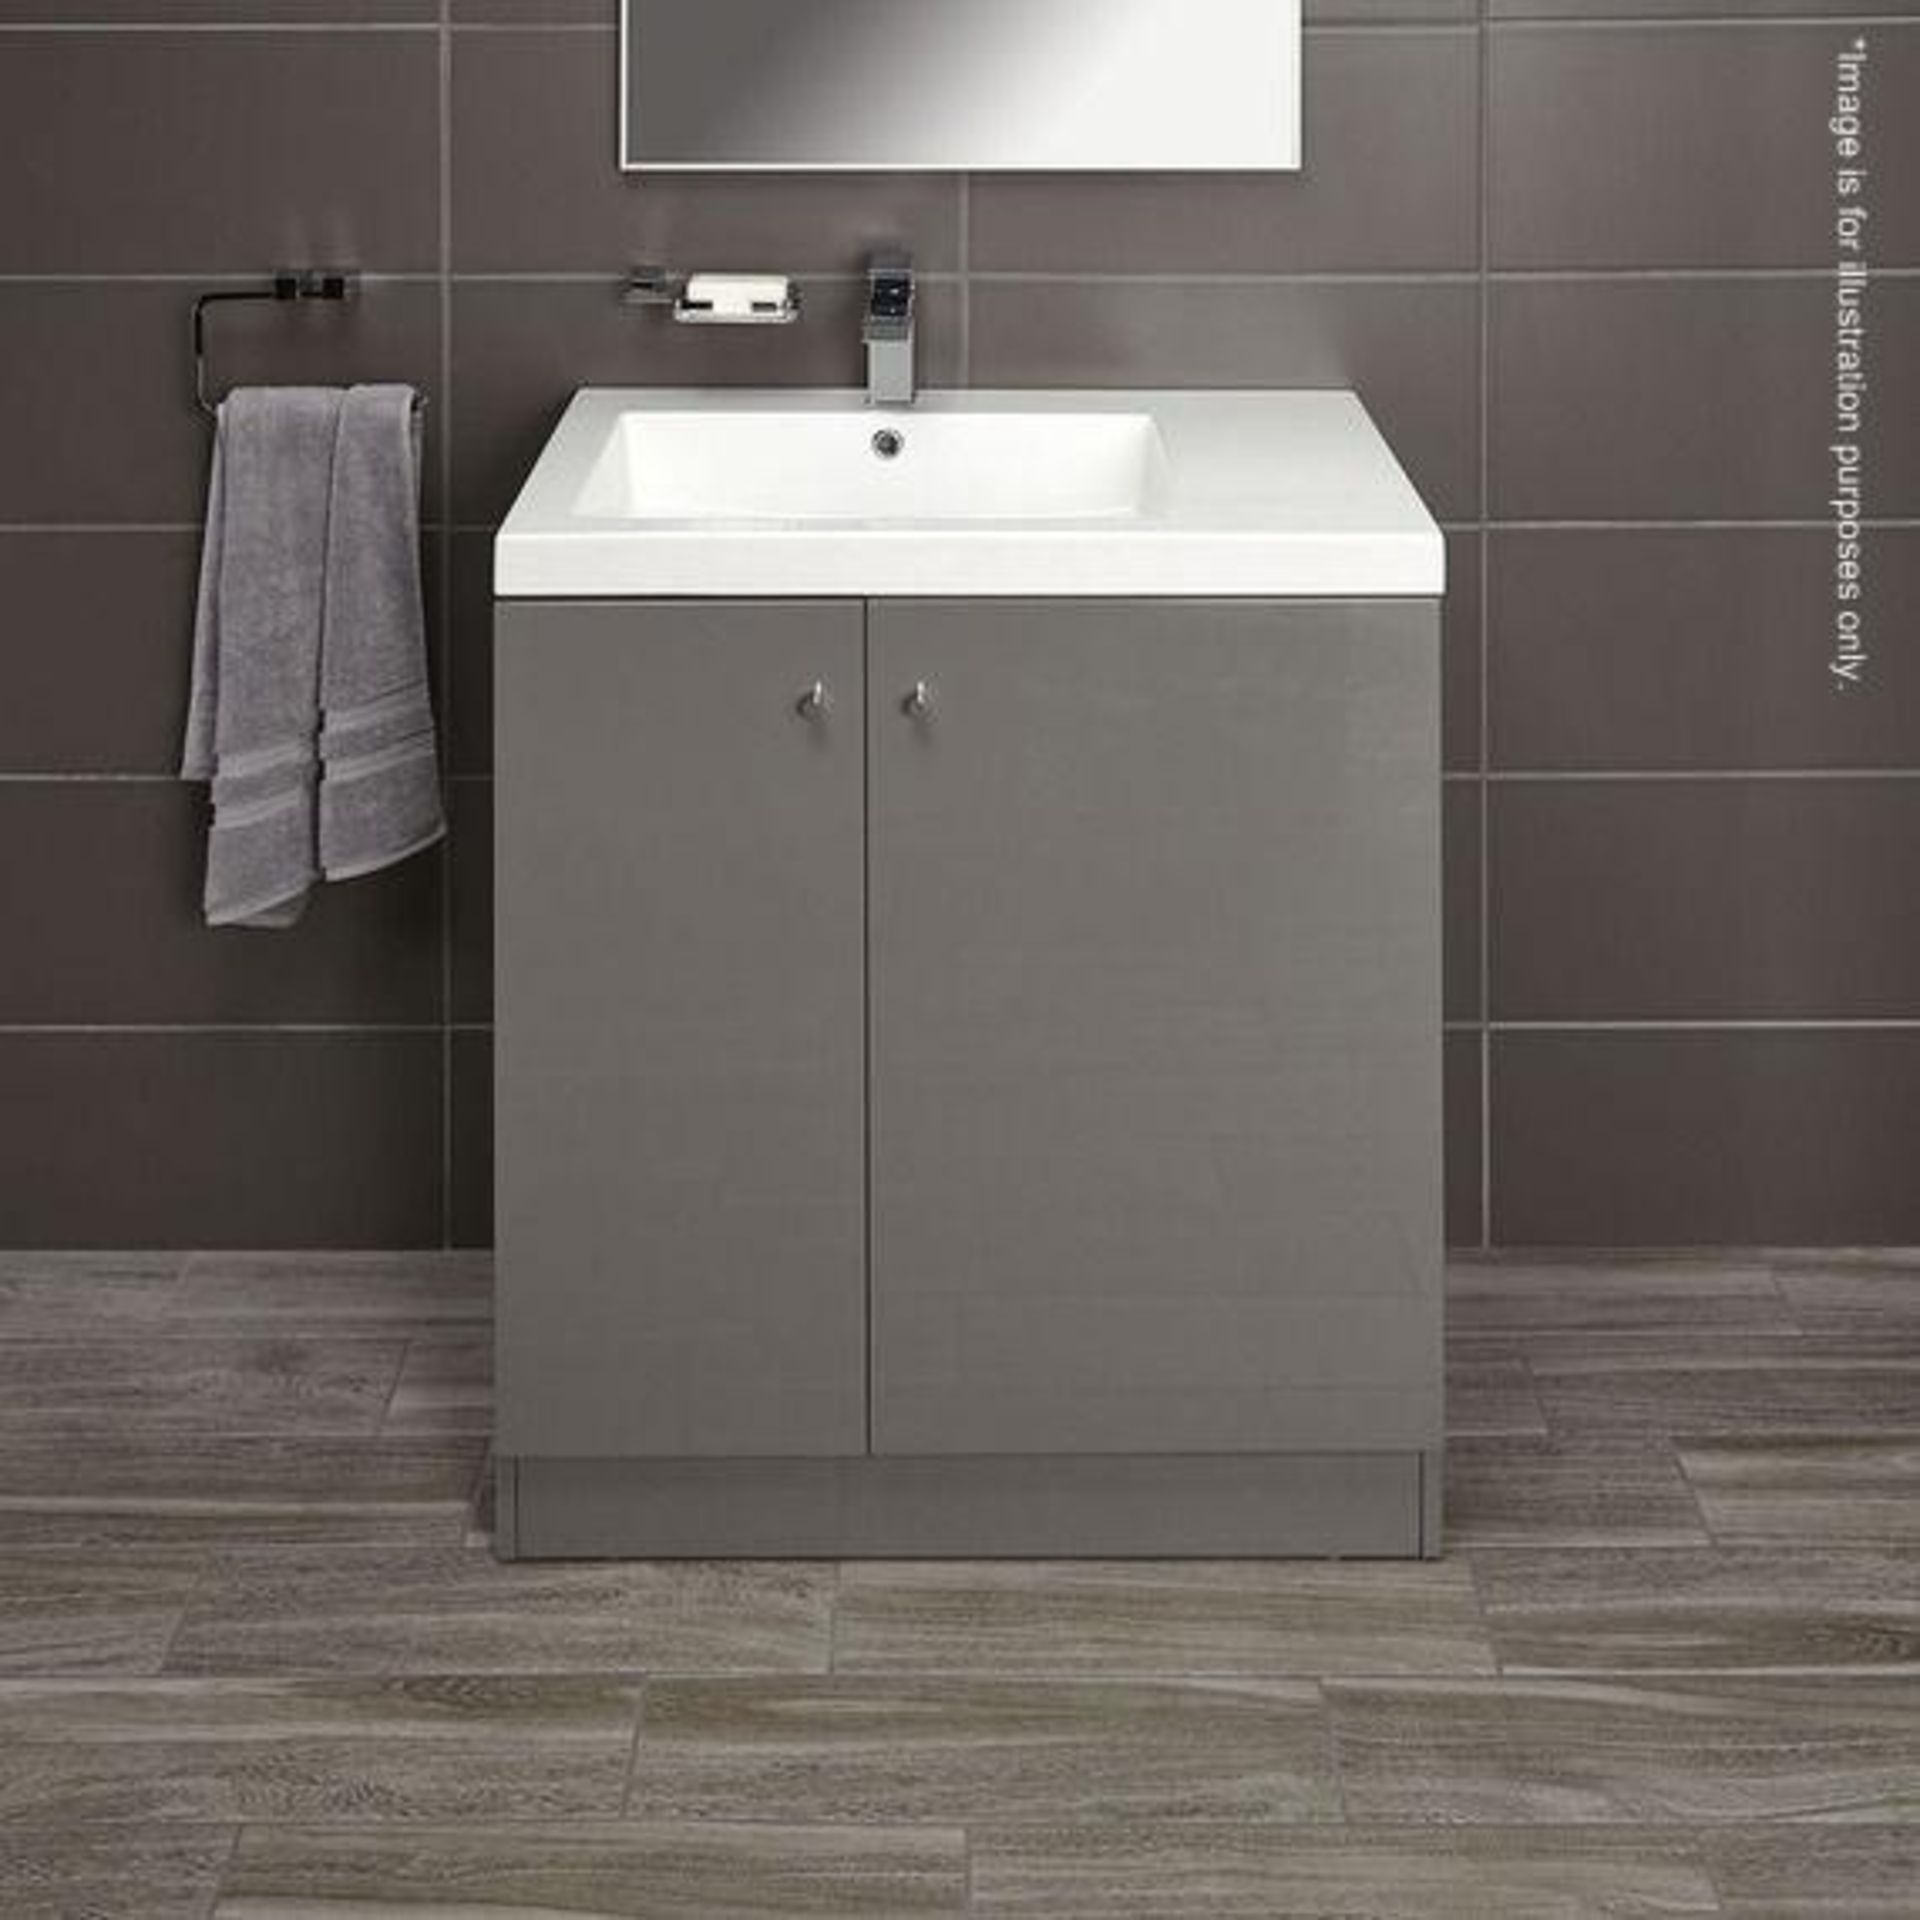 10 x Alpine Duo 750 Floorstanding Vanity Units In Gloss Grey - Dimensions: H80 x W75 x D49.5cm - - Image 4 of 4